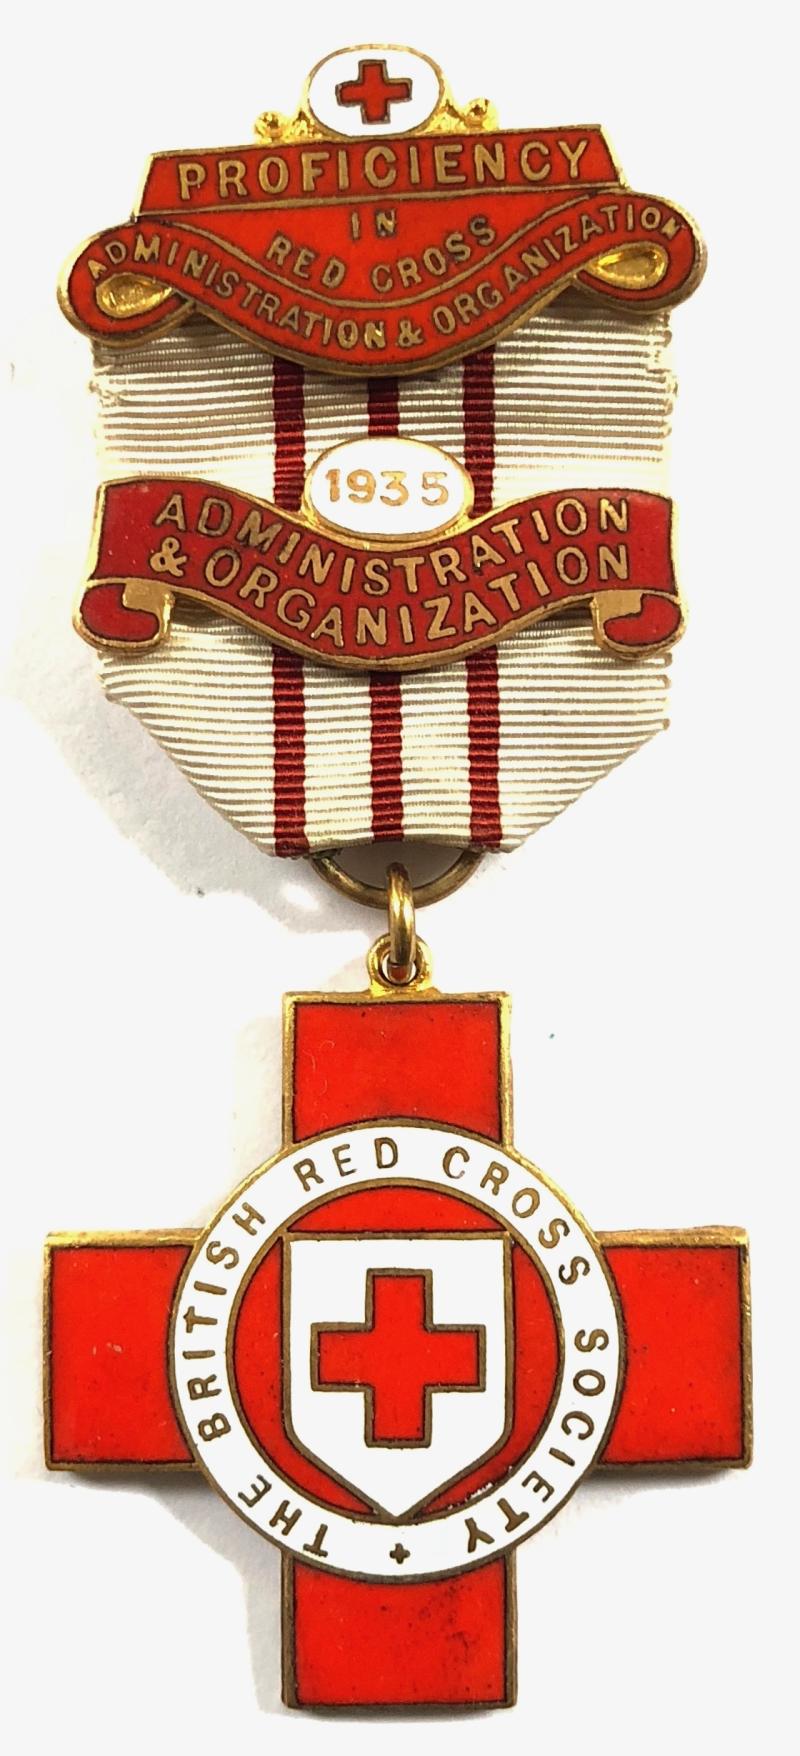 British Red Cross Society Proficiency Administration & Organization medal & clasp N.H.BLAIR